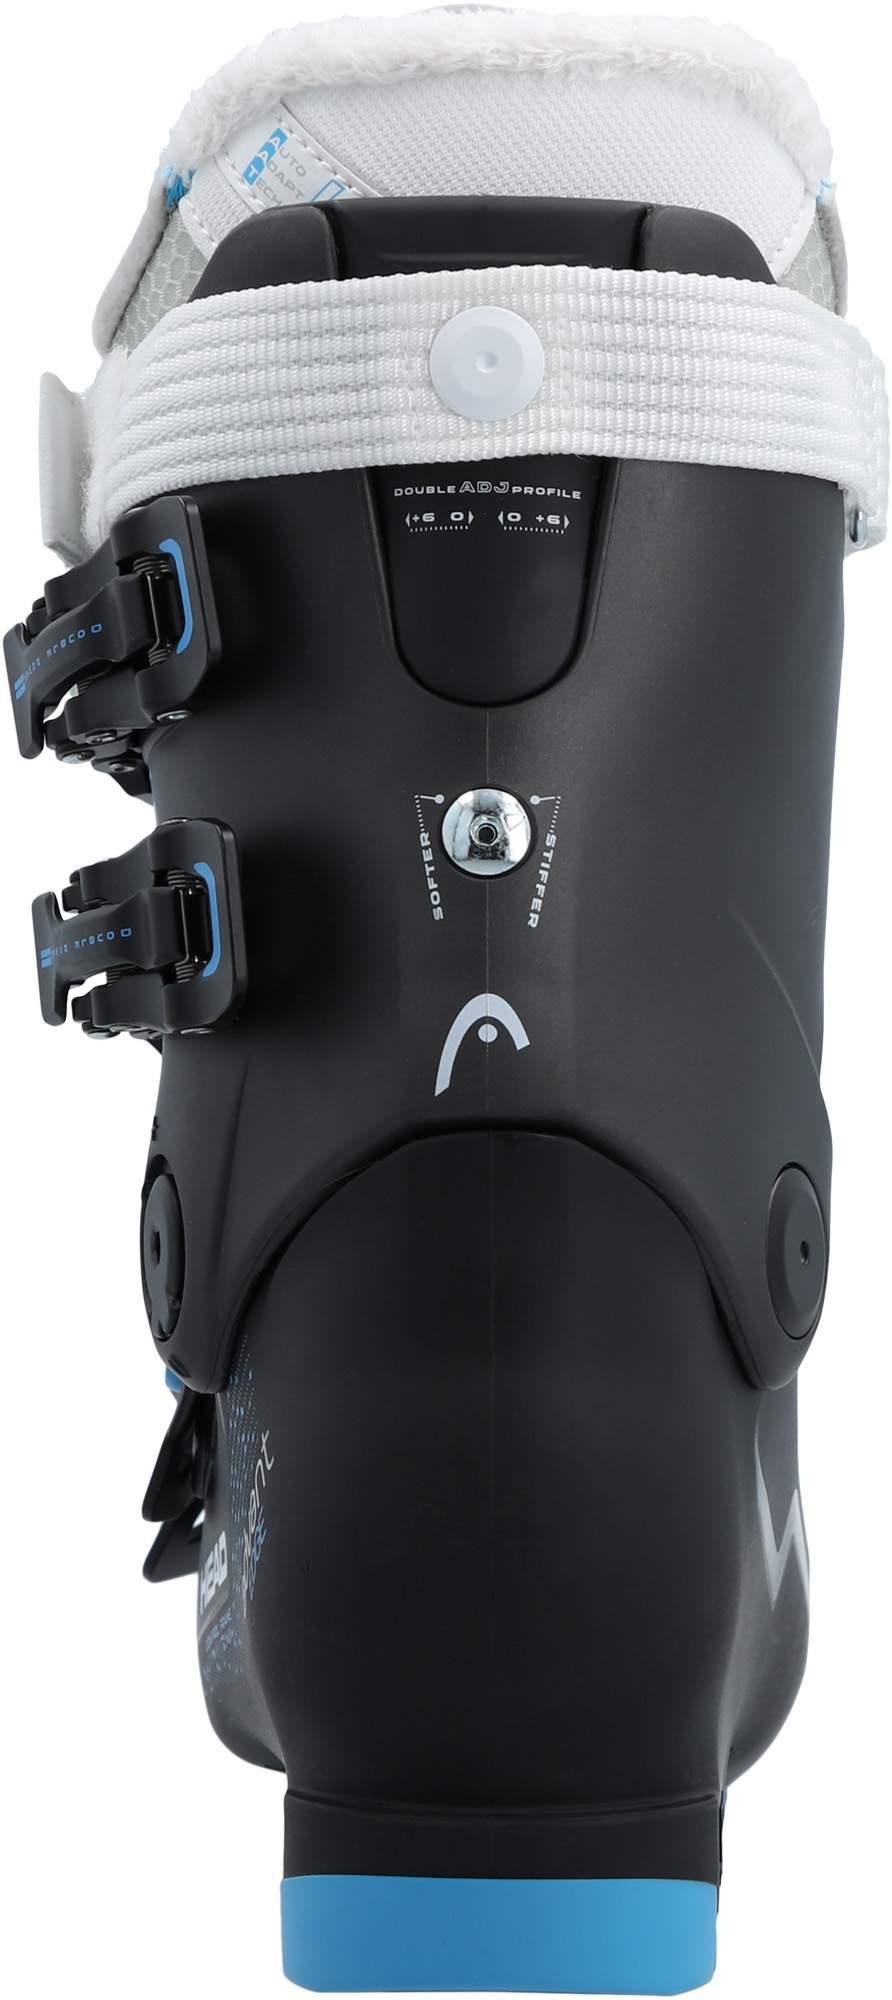 Горнолыжные ботинки Head Advant Edge 85 W 2020 anthracite/black, 25,5